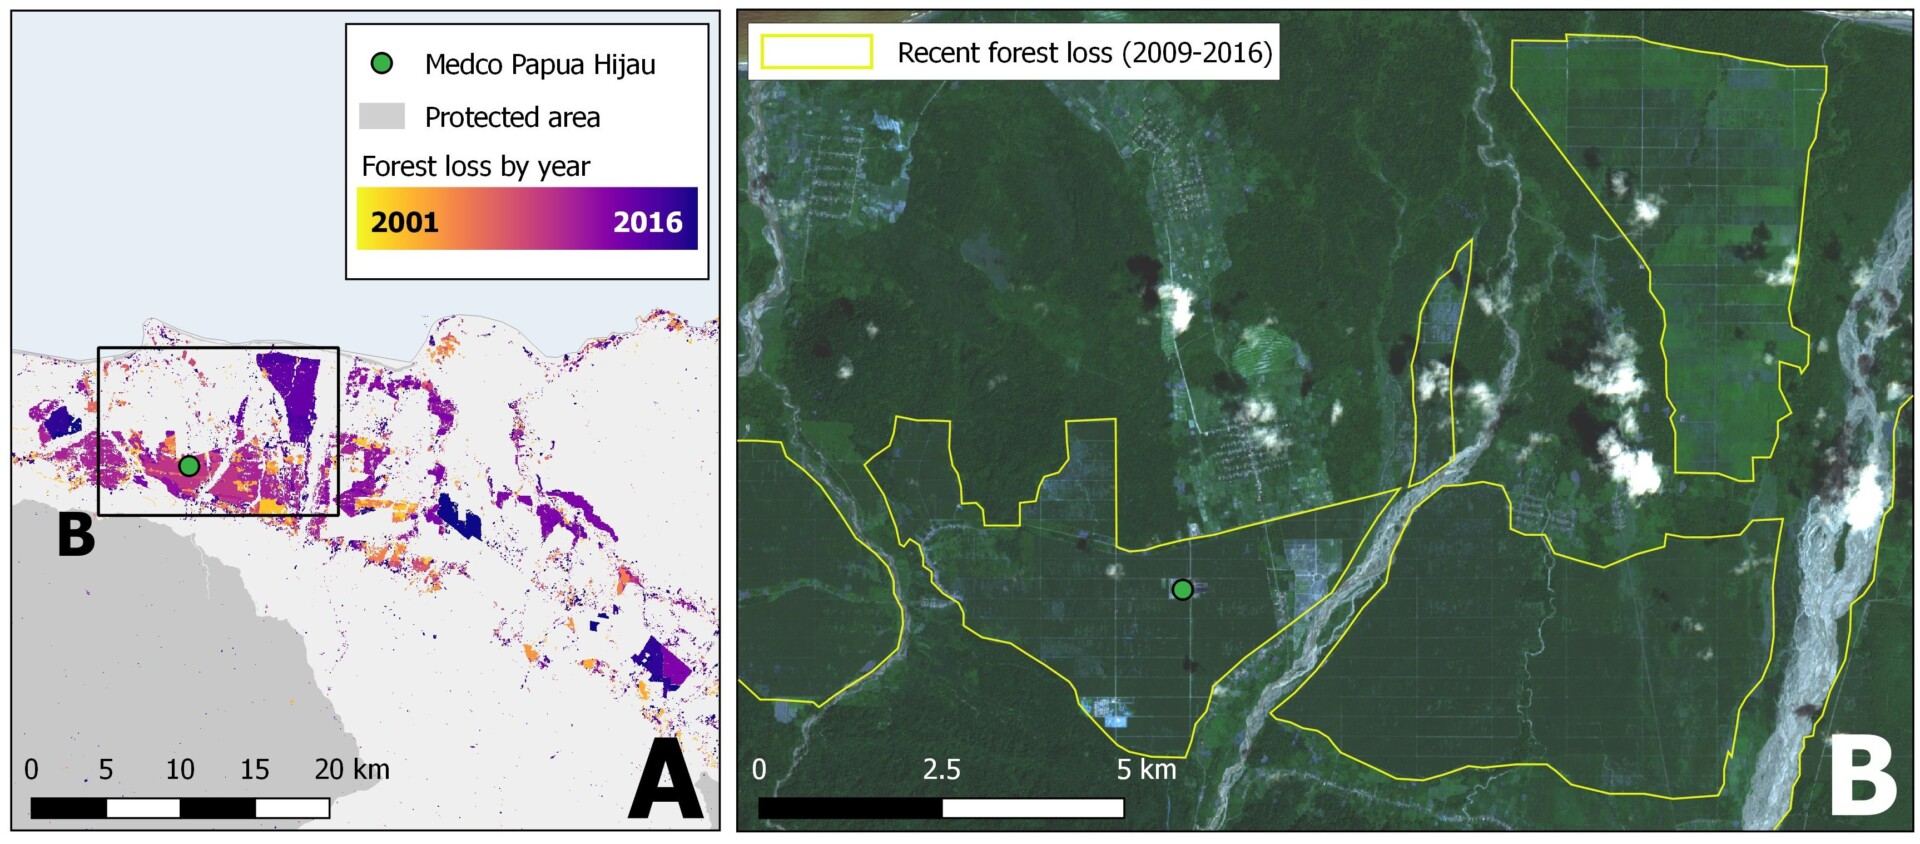 Forest change around Medco Papua Hijau